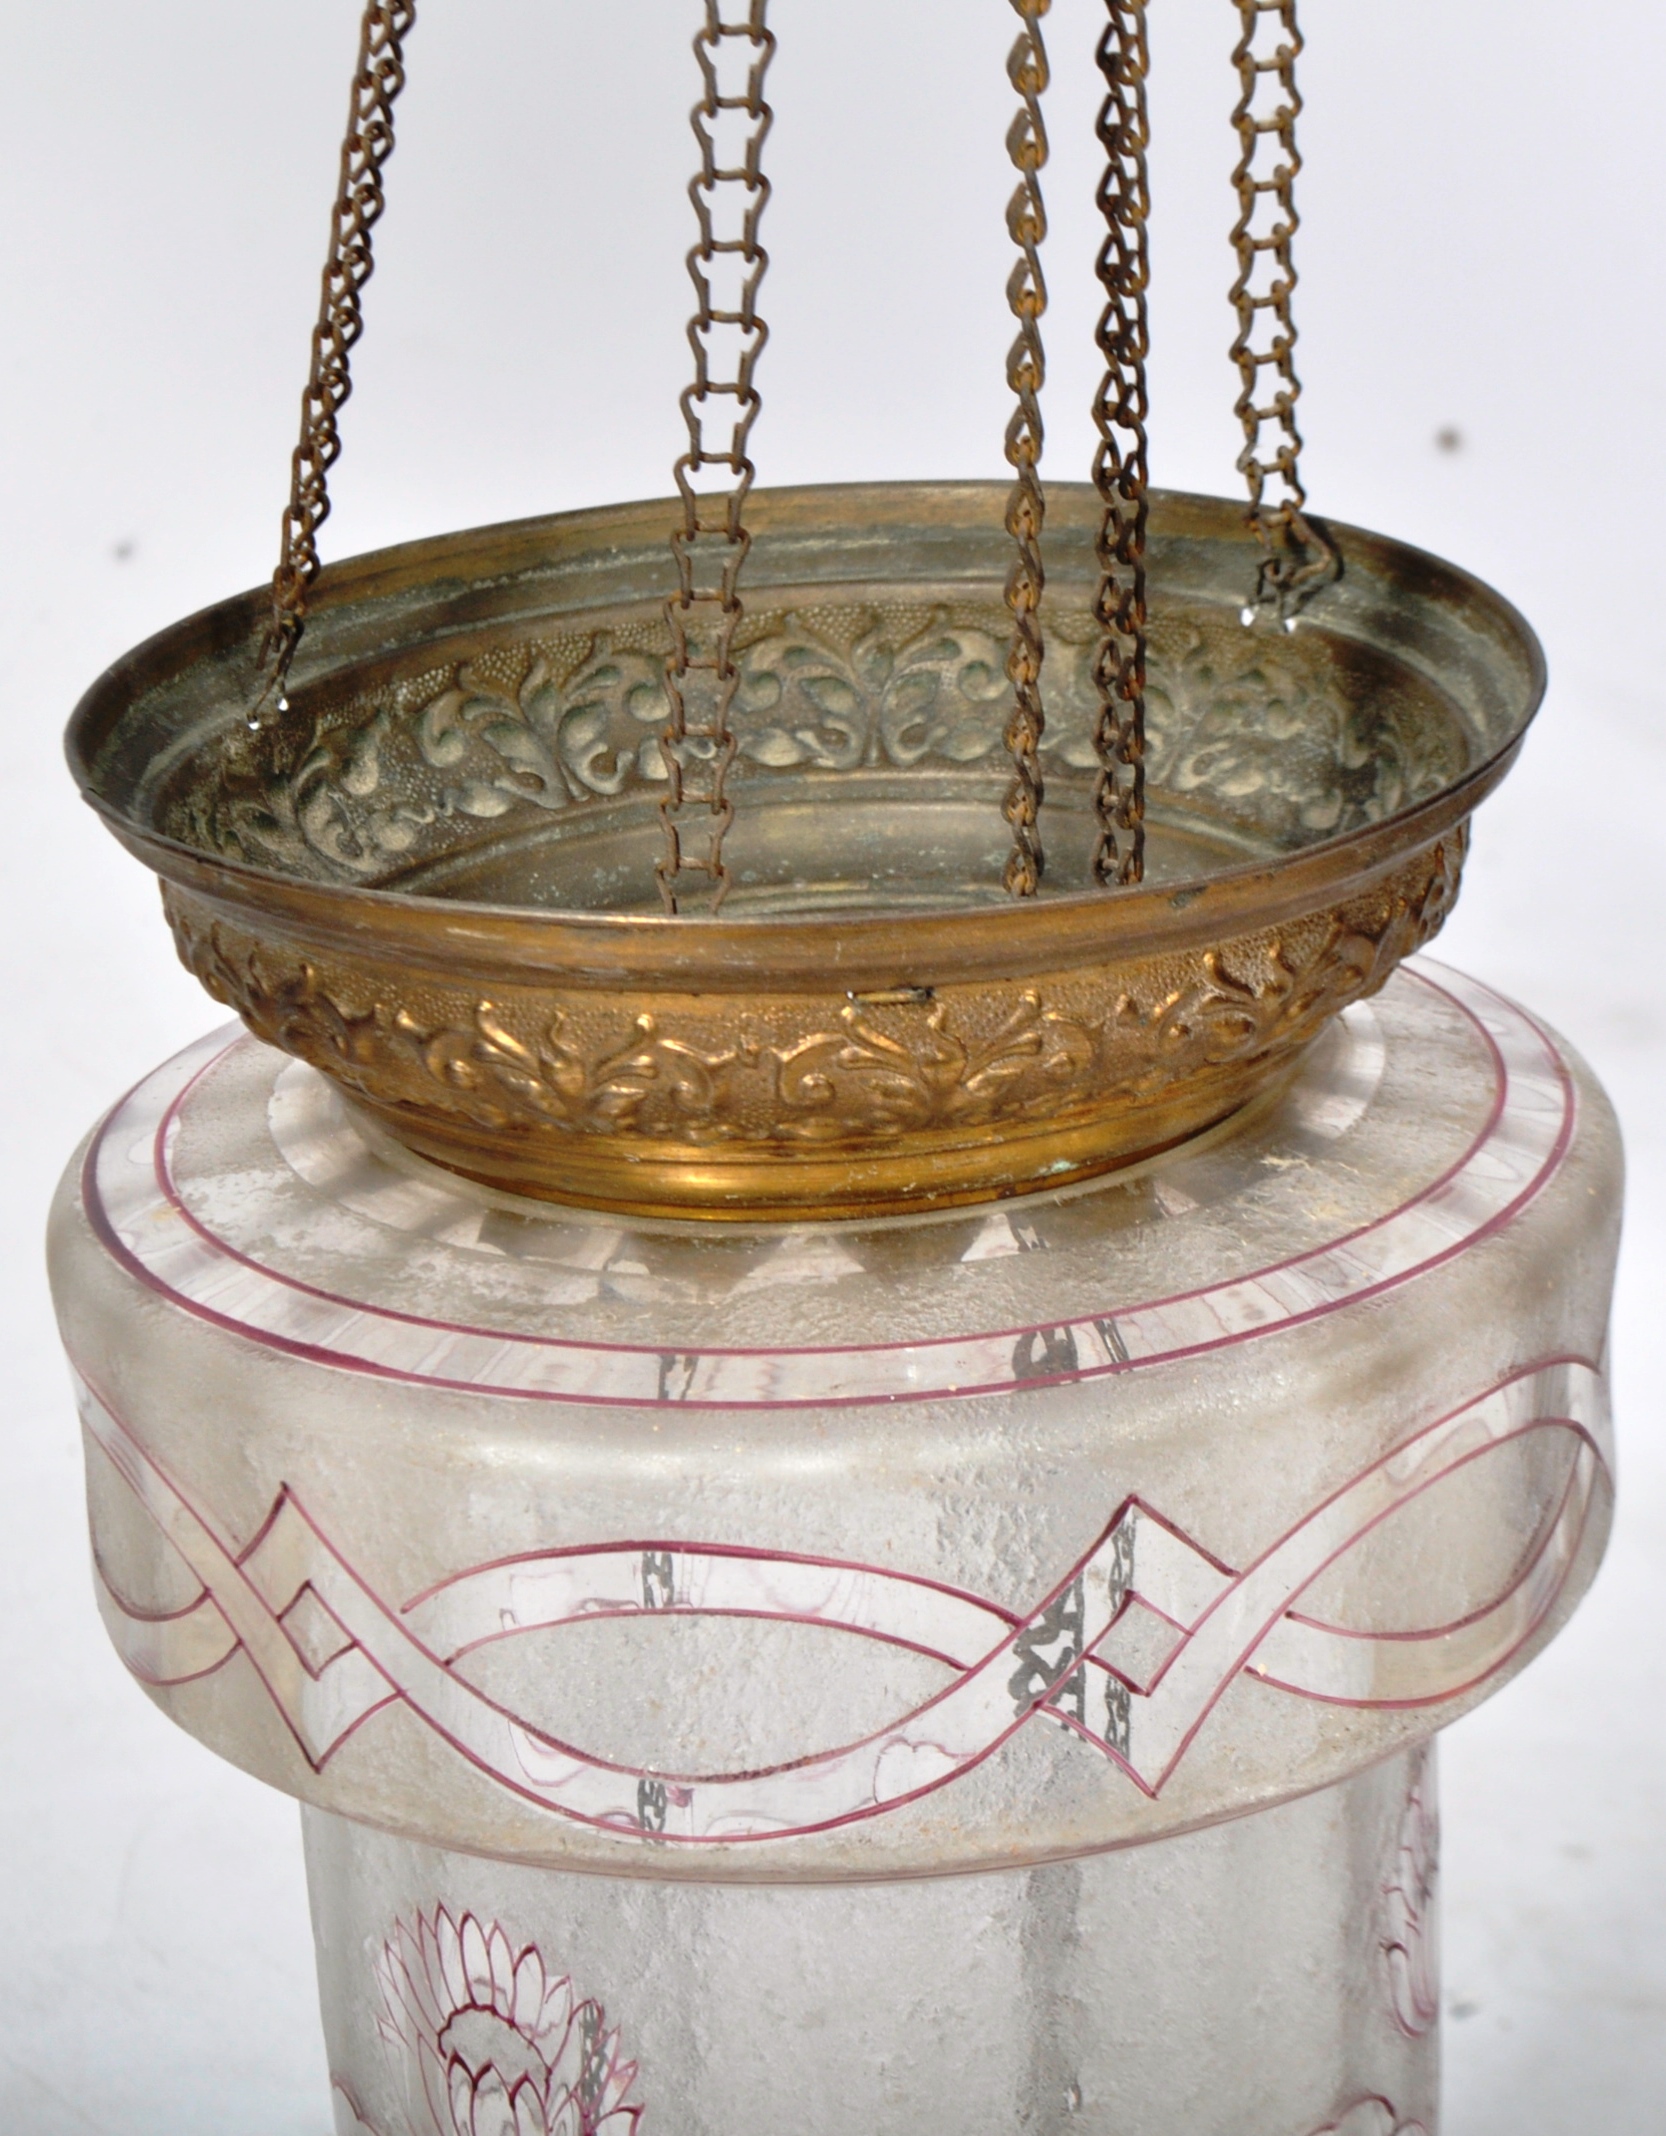 19TH CENTURY GLASS AND GILT METAL HANGING LANTERN - Image 3 of 4